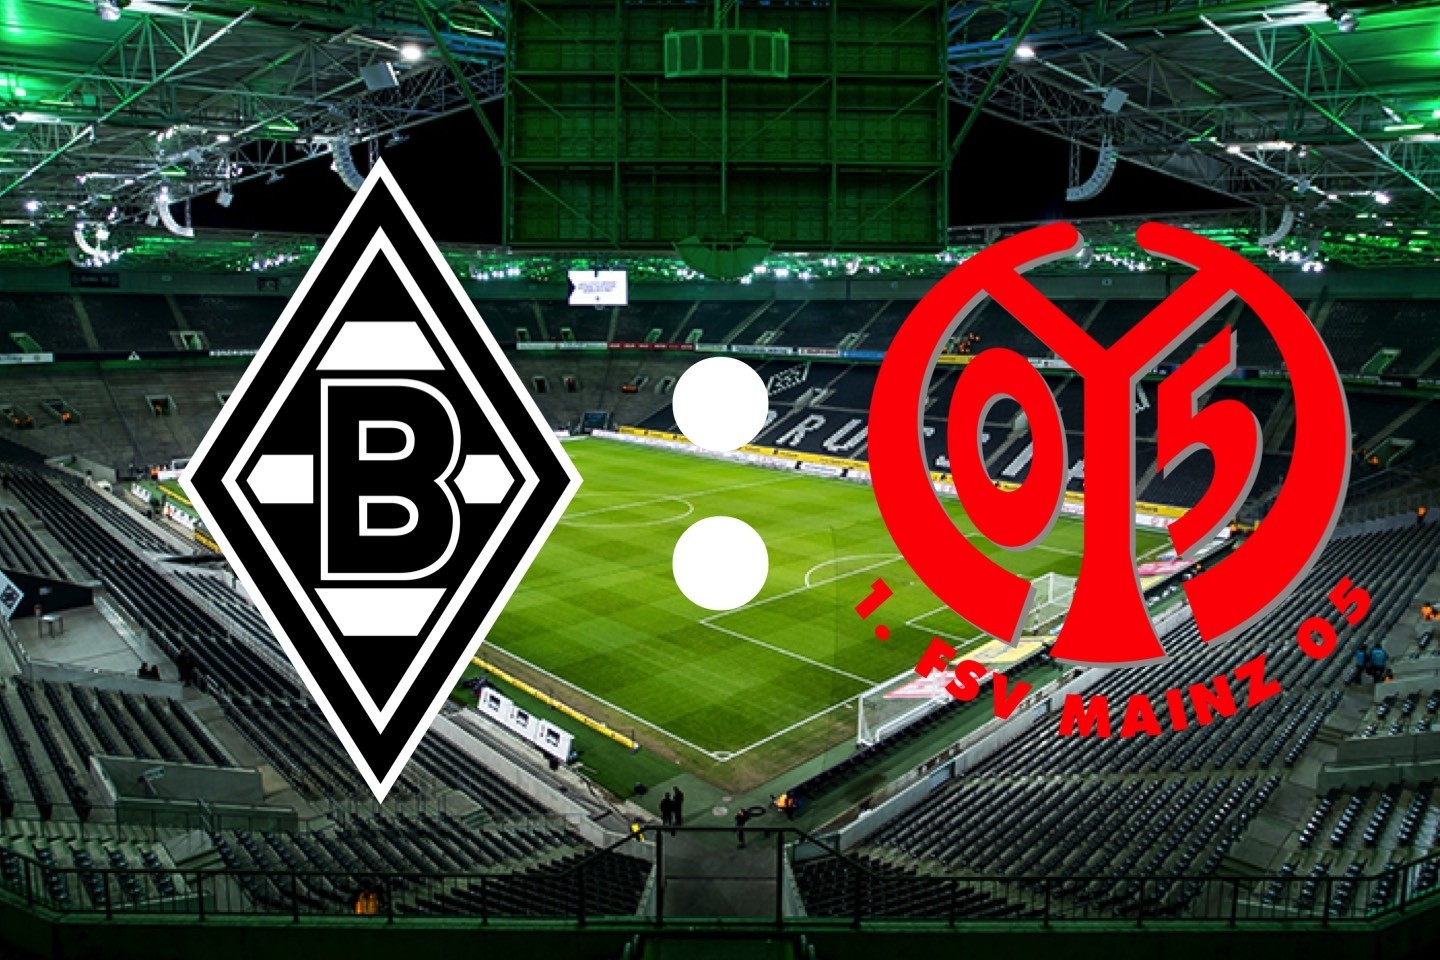 Gladbach Fan-Club,Warendorfer Fohlen,Borussia Mönchengladbach,Busfahrt,Warendorf,Mainz 05